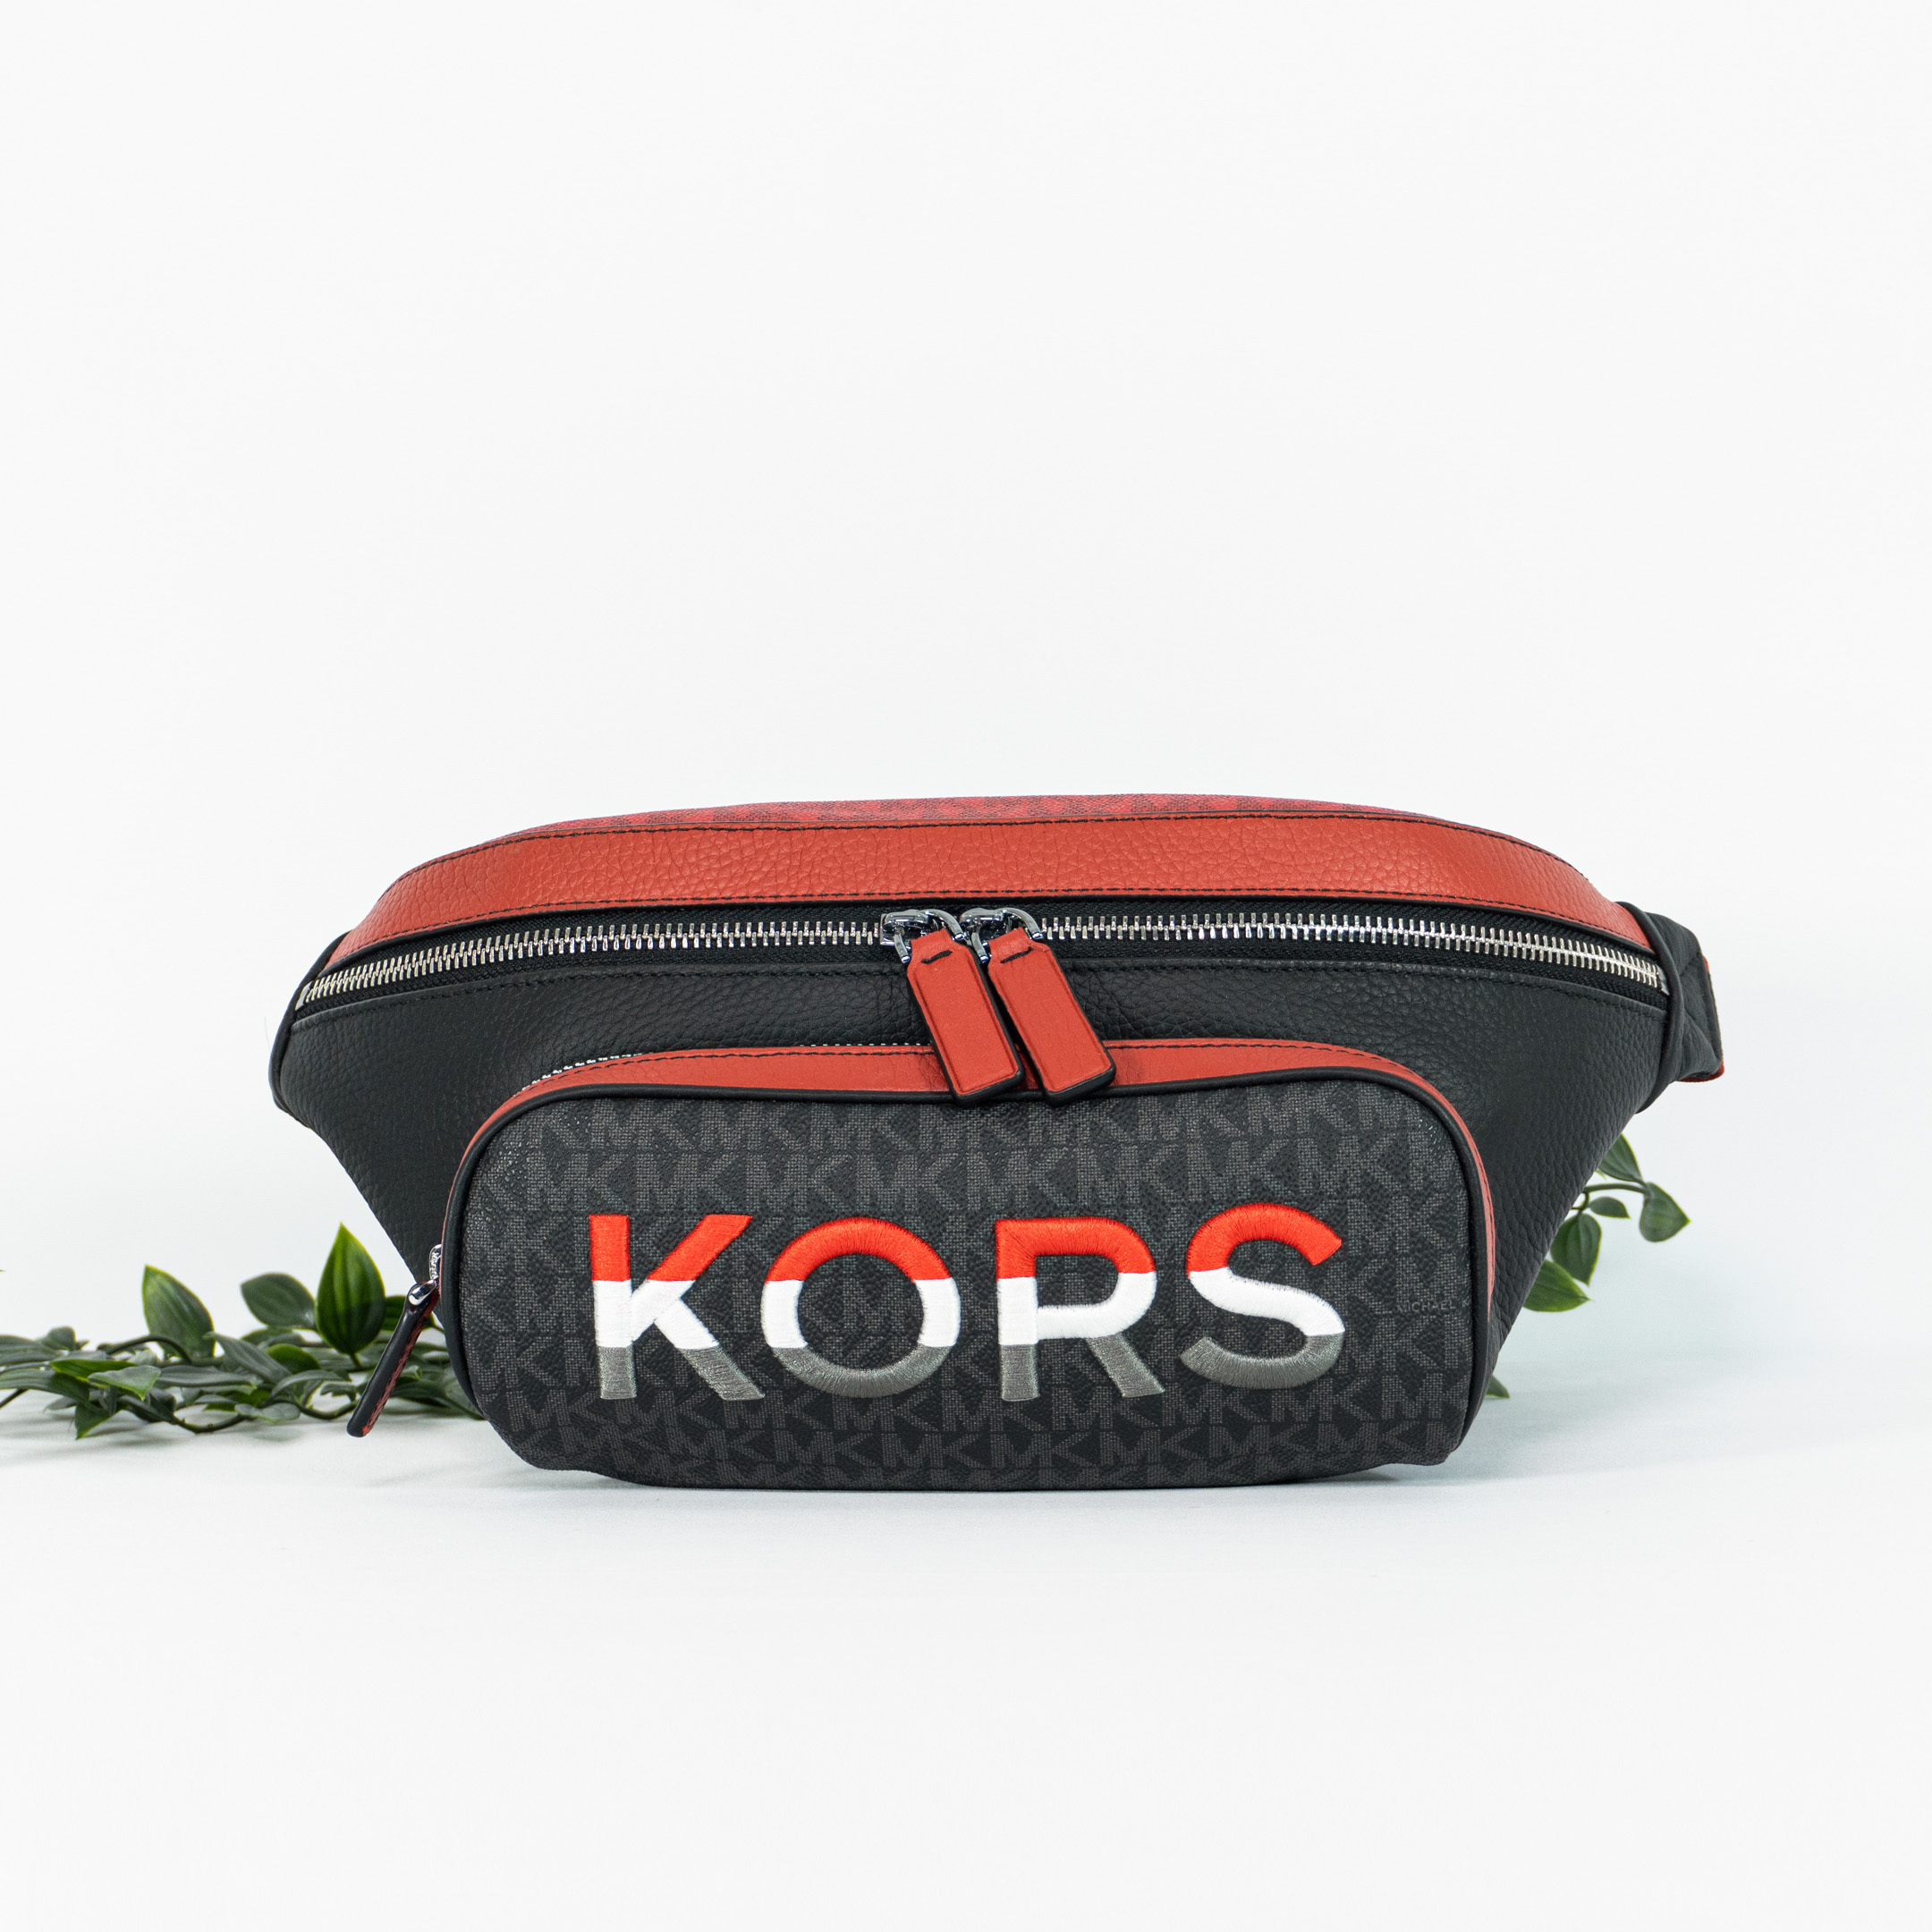 MICHAEL KORS Men's Signature Cooper Embroidered Belt Bag in